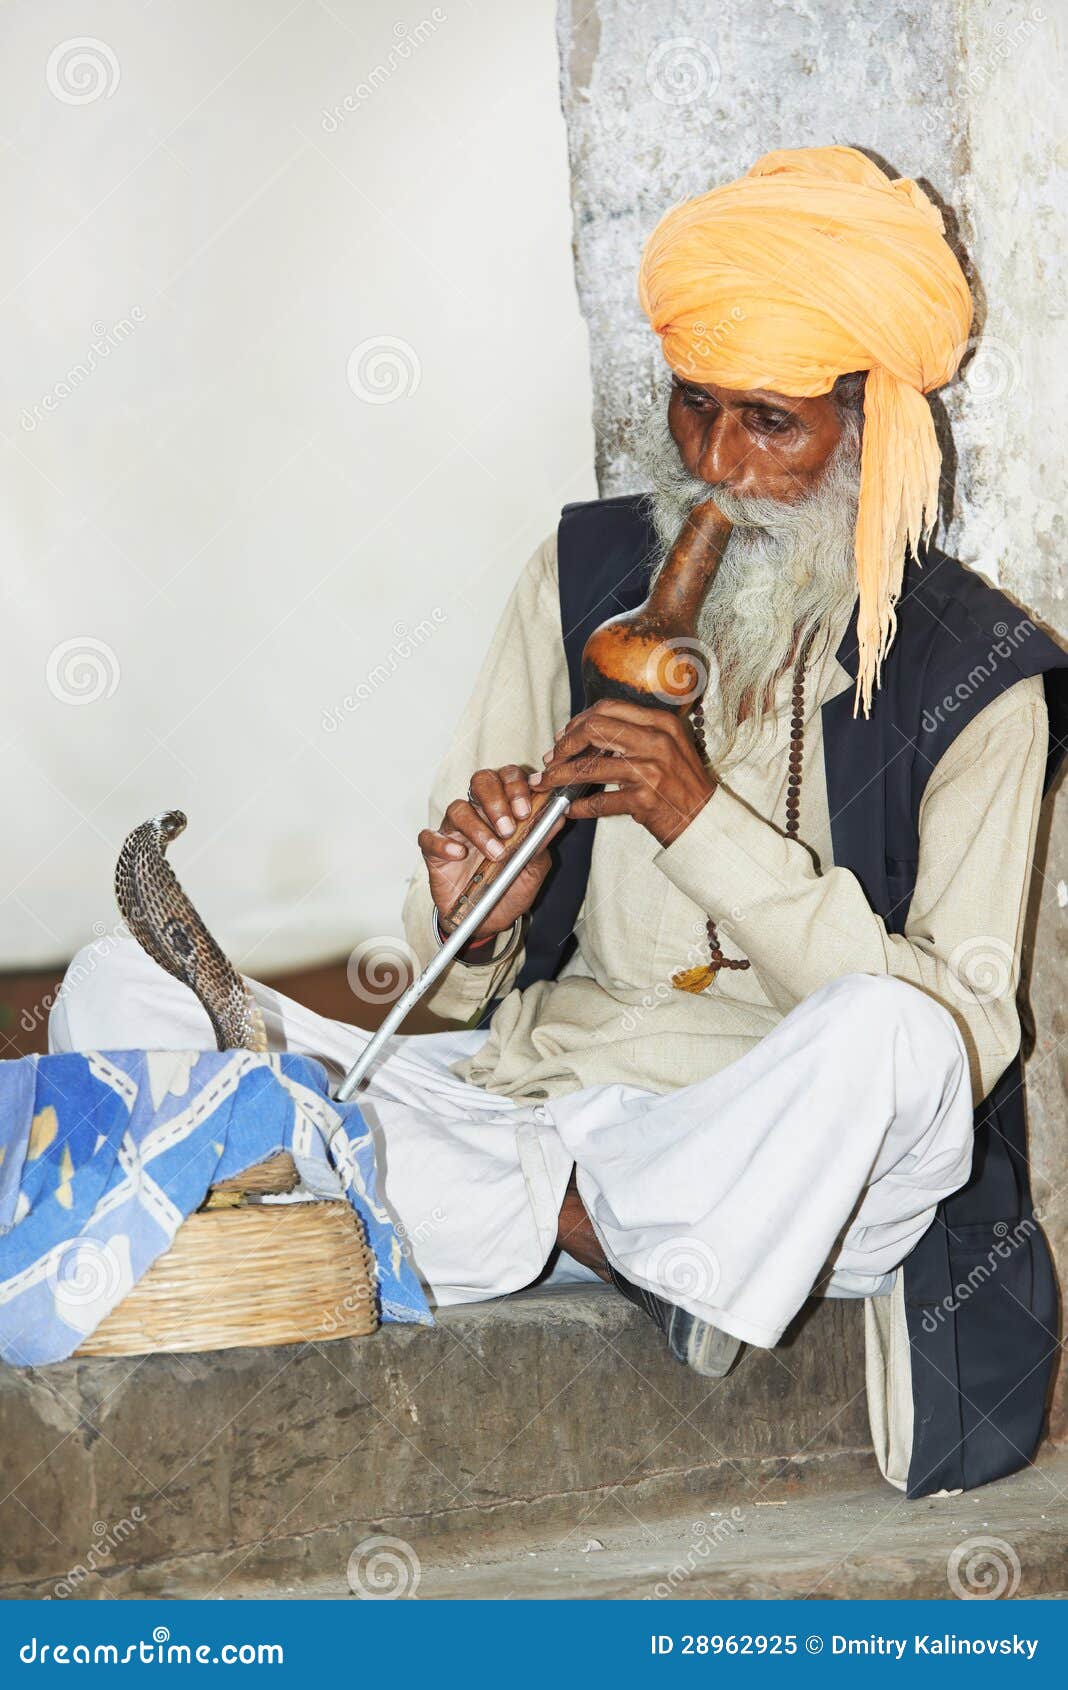 charmer of snake in india